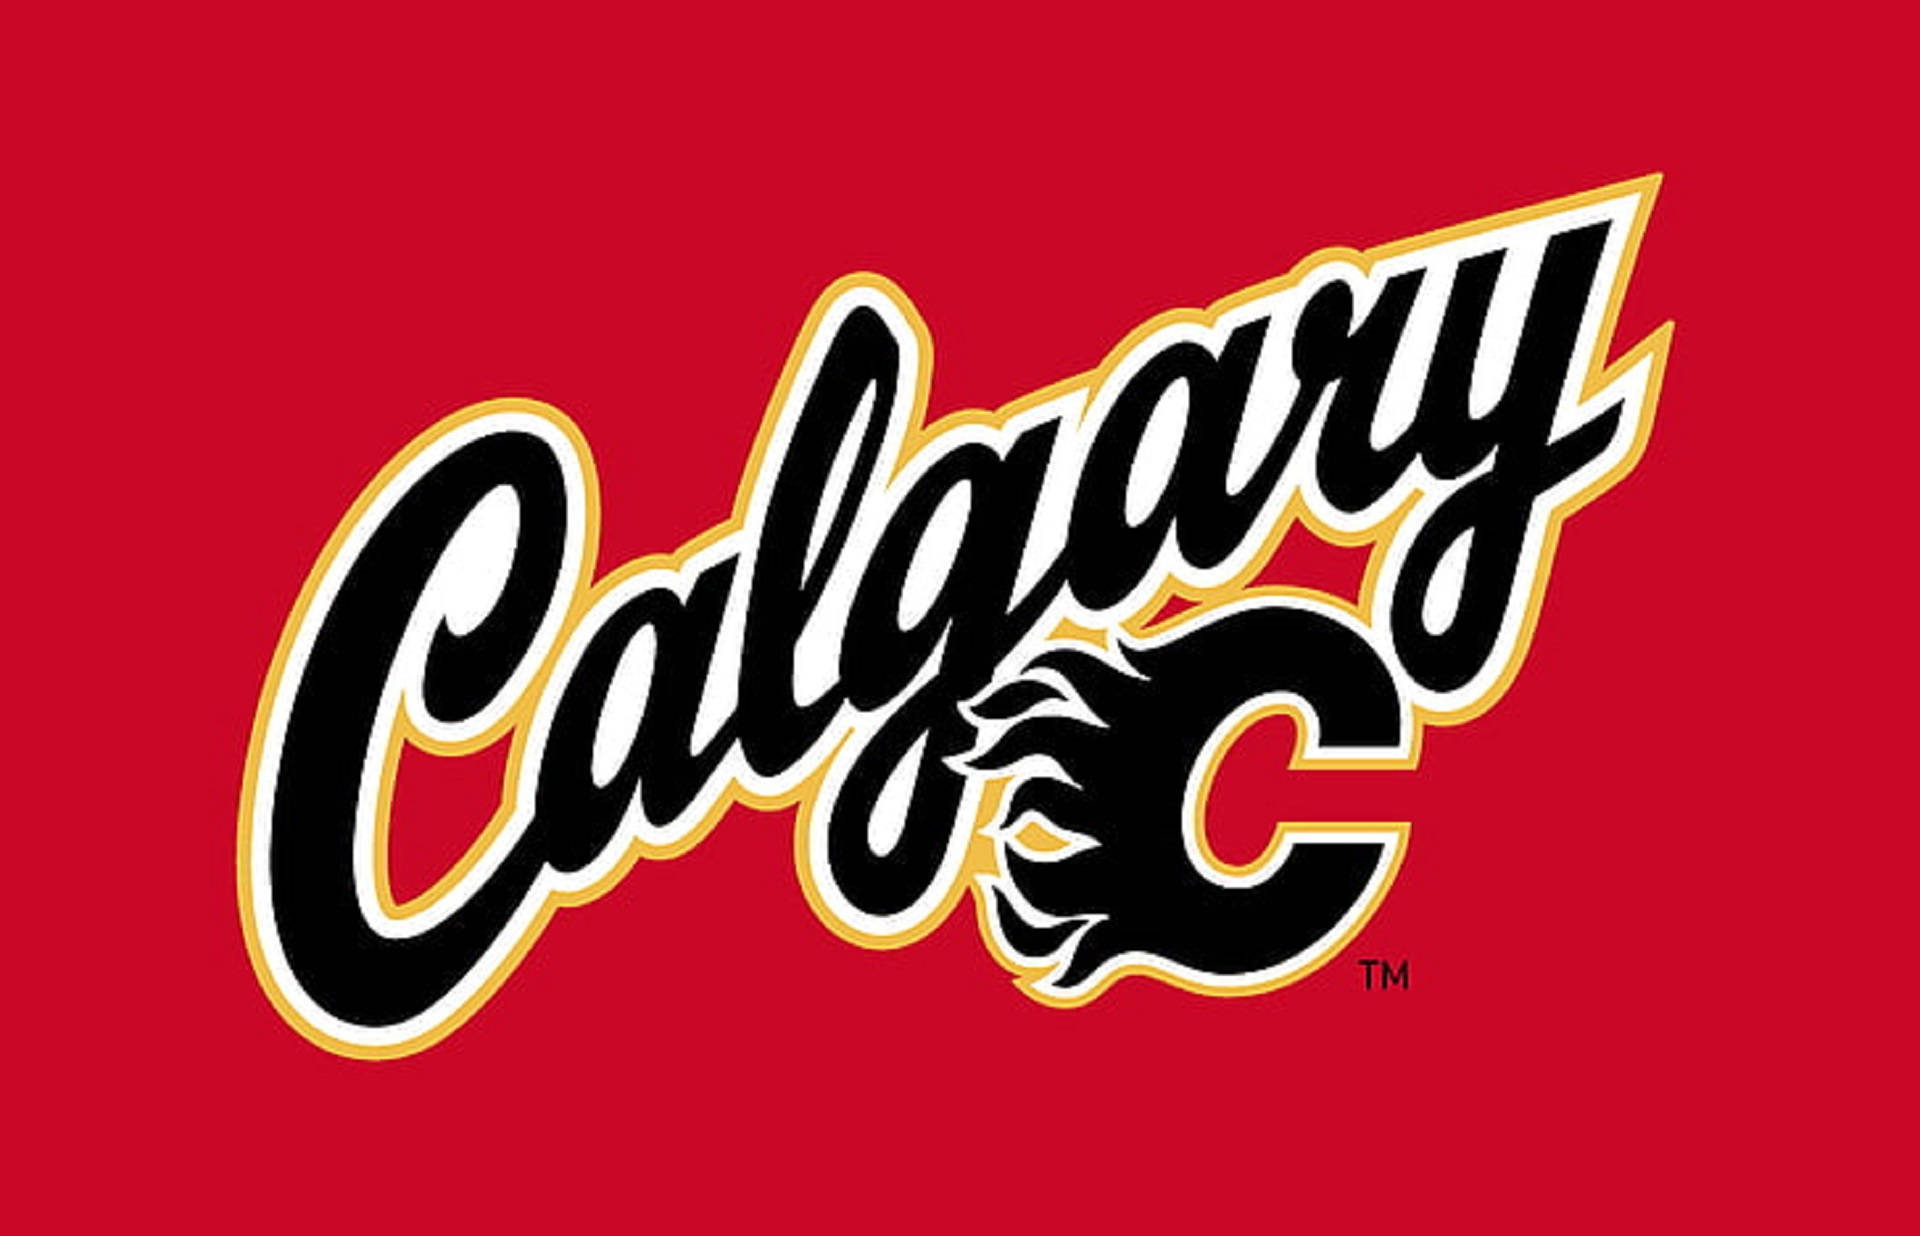 Black Calgary Flames Wordmark Wallpaper